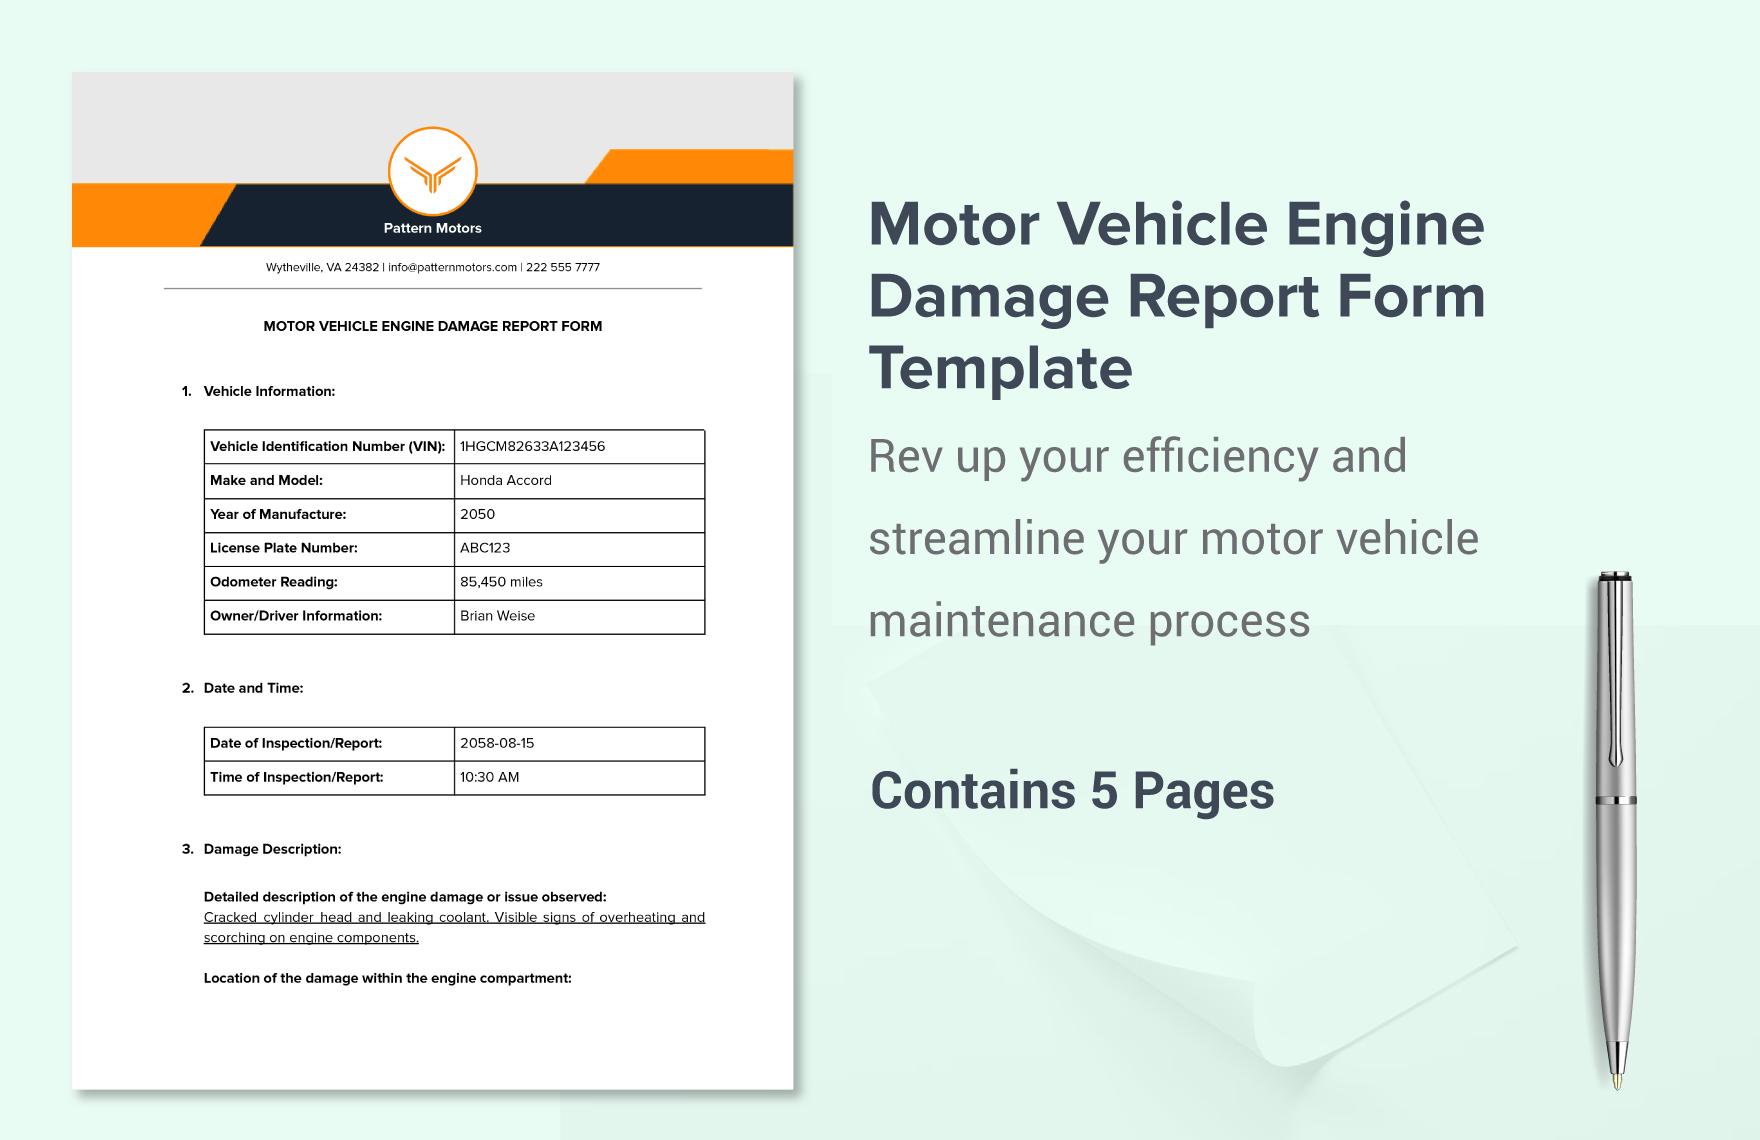 Motor Vehicle Engine Damage Report Form Template